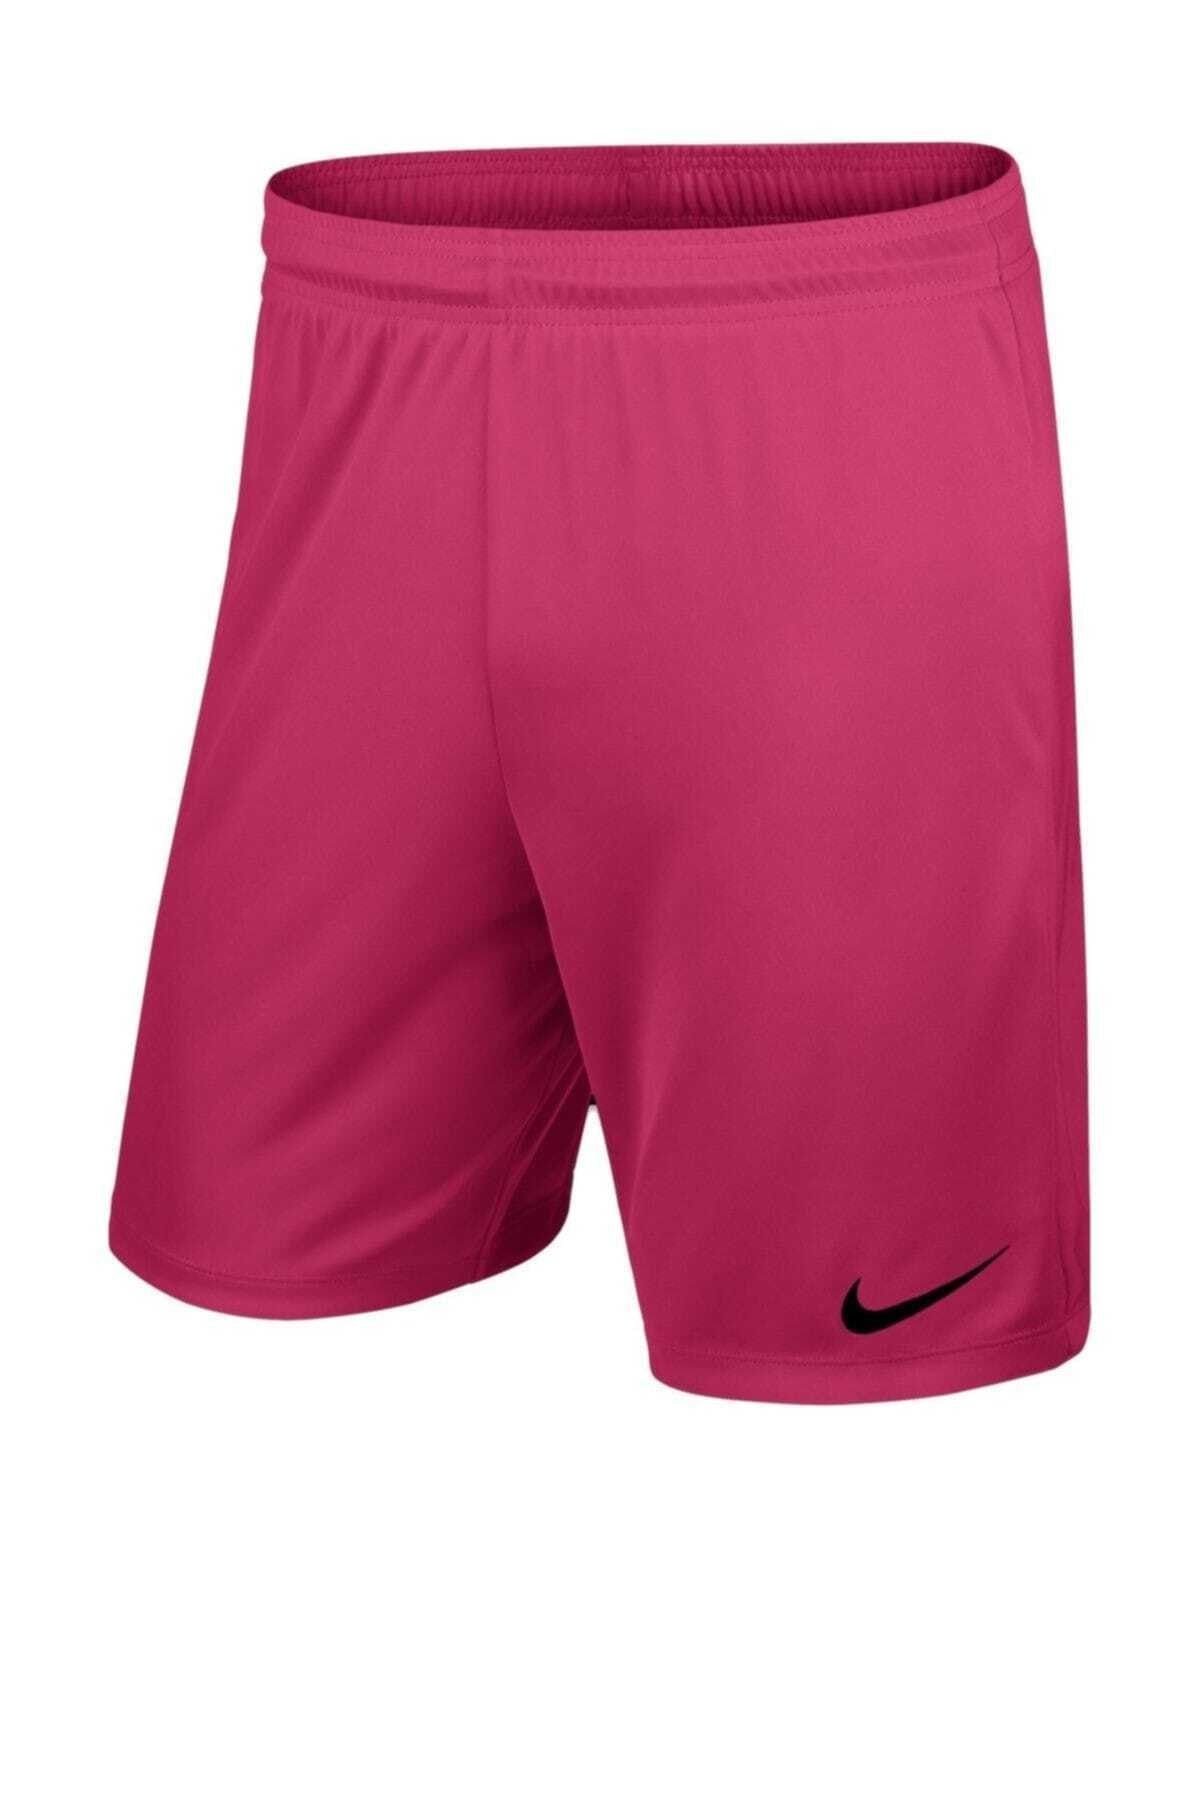 Nike Erkek Şort - Park II Knit - 725887-616